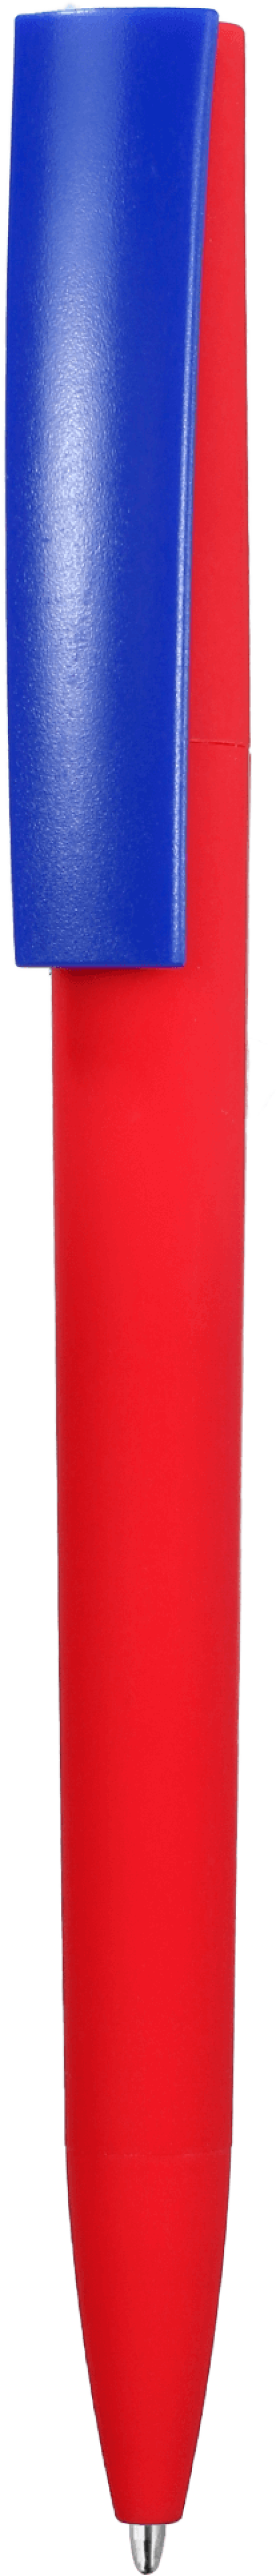 Ручка ZETA SOFT MIX Красная с синим 1024.03.01